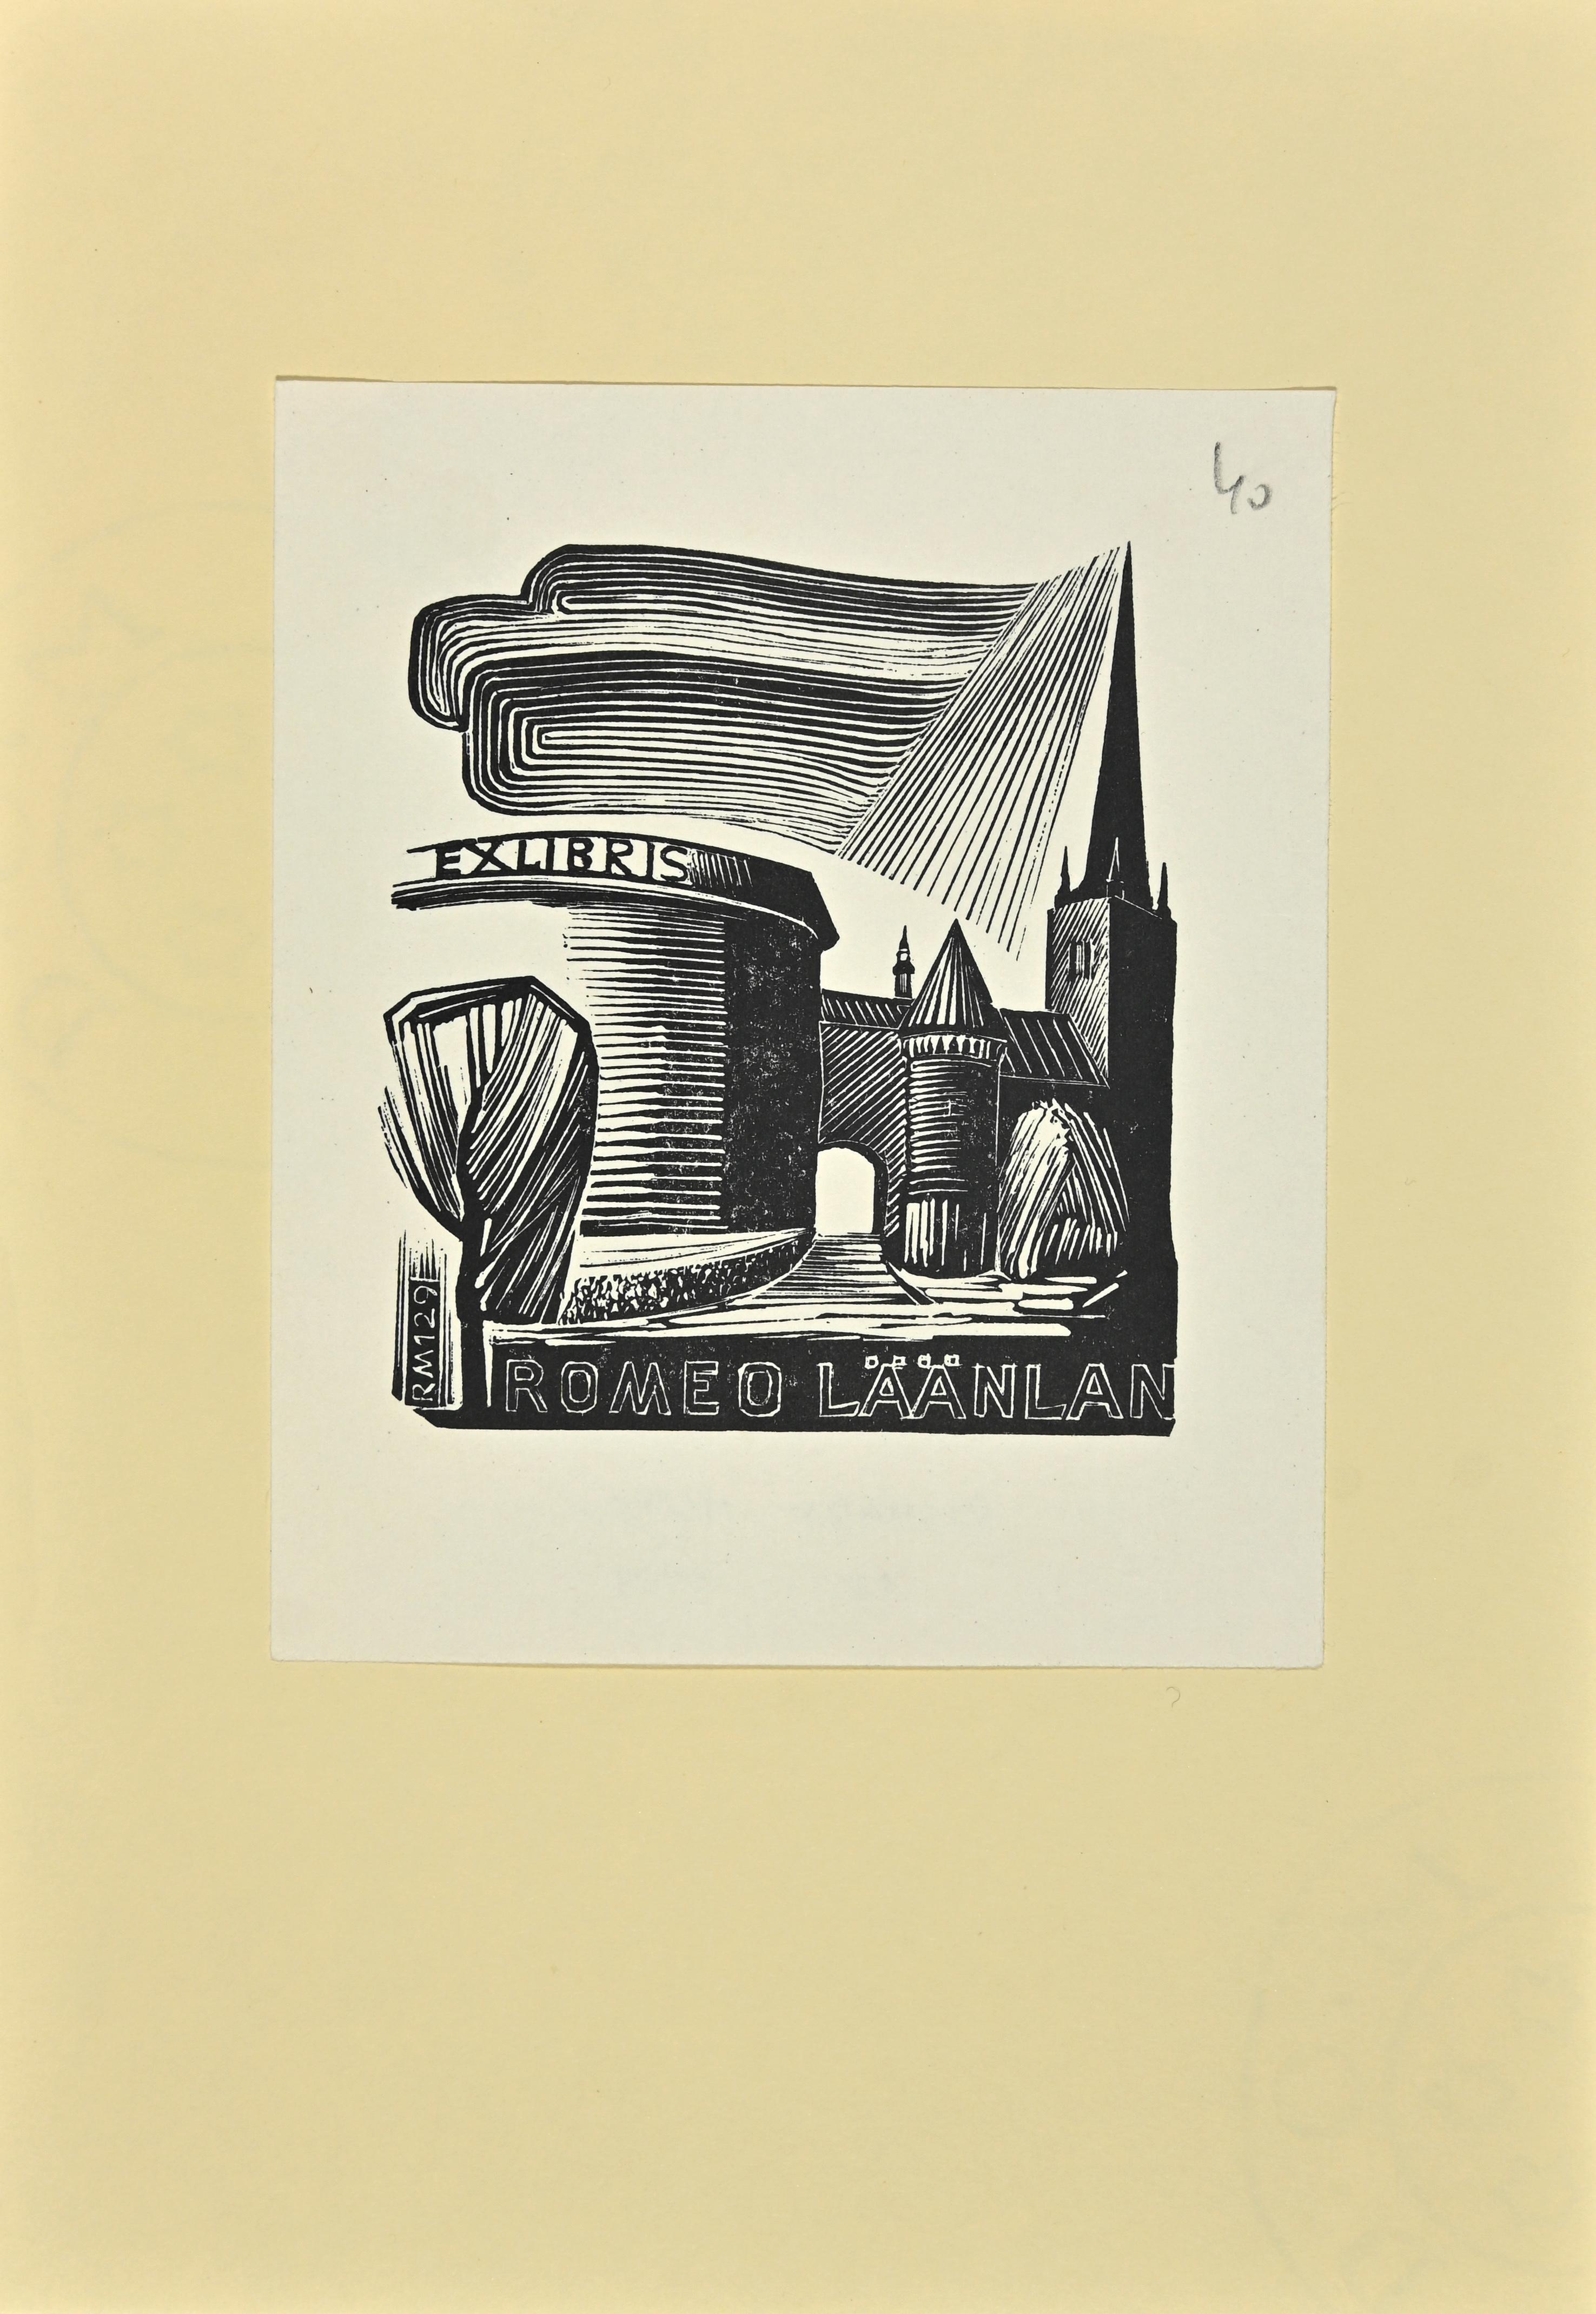  Ex Libris - Romeo Laanlan - Woodcut - 1983